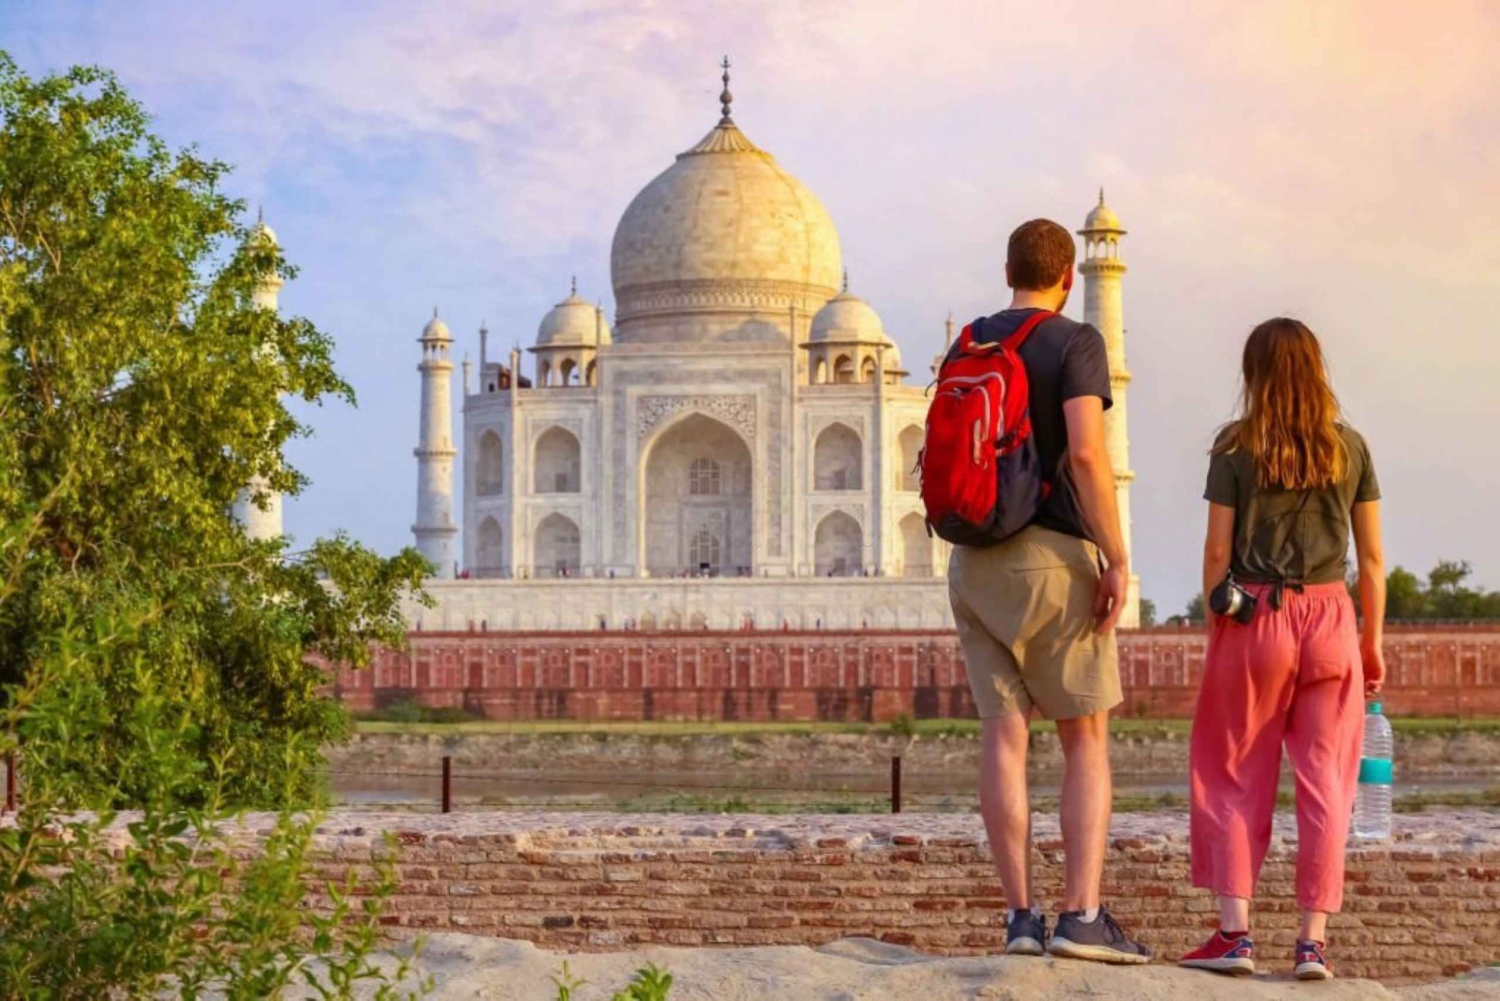 From New Delhi: Delhi, Agra and Taj Mahal Guided Tour